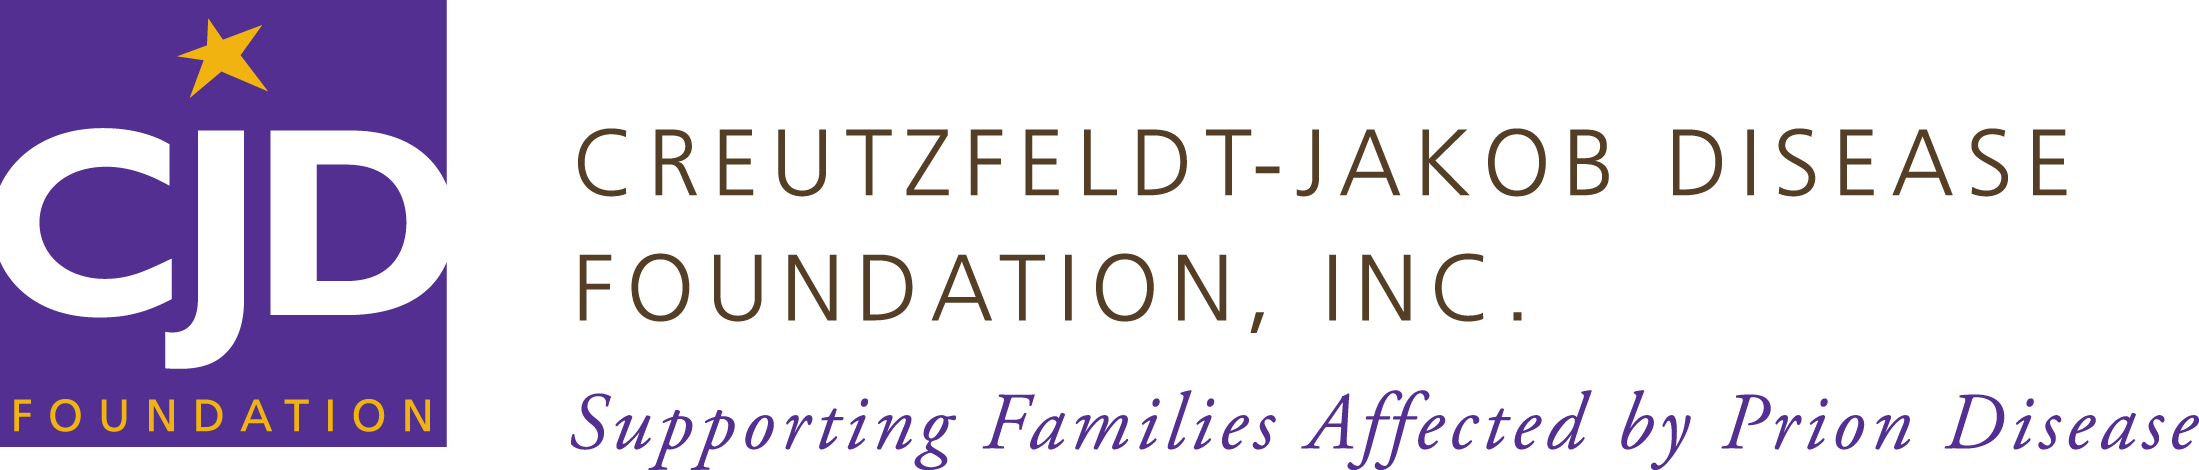 Image for Creutzfeldt-Jakob Disease Foundation